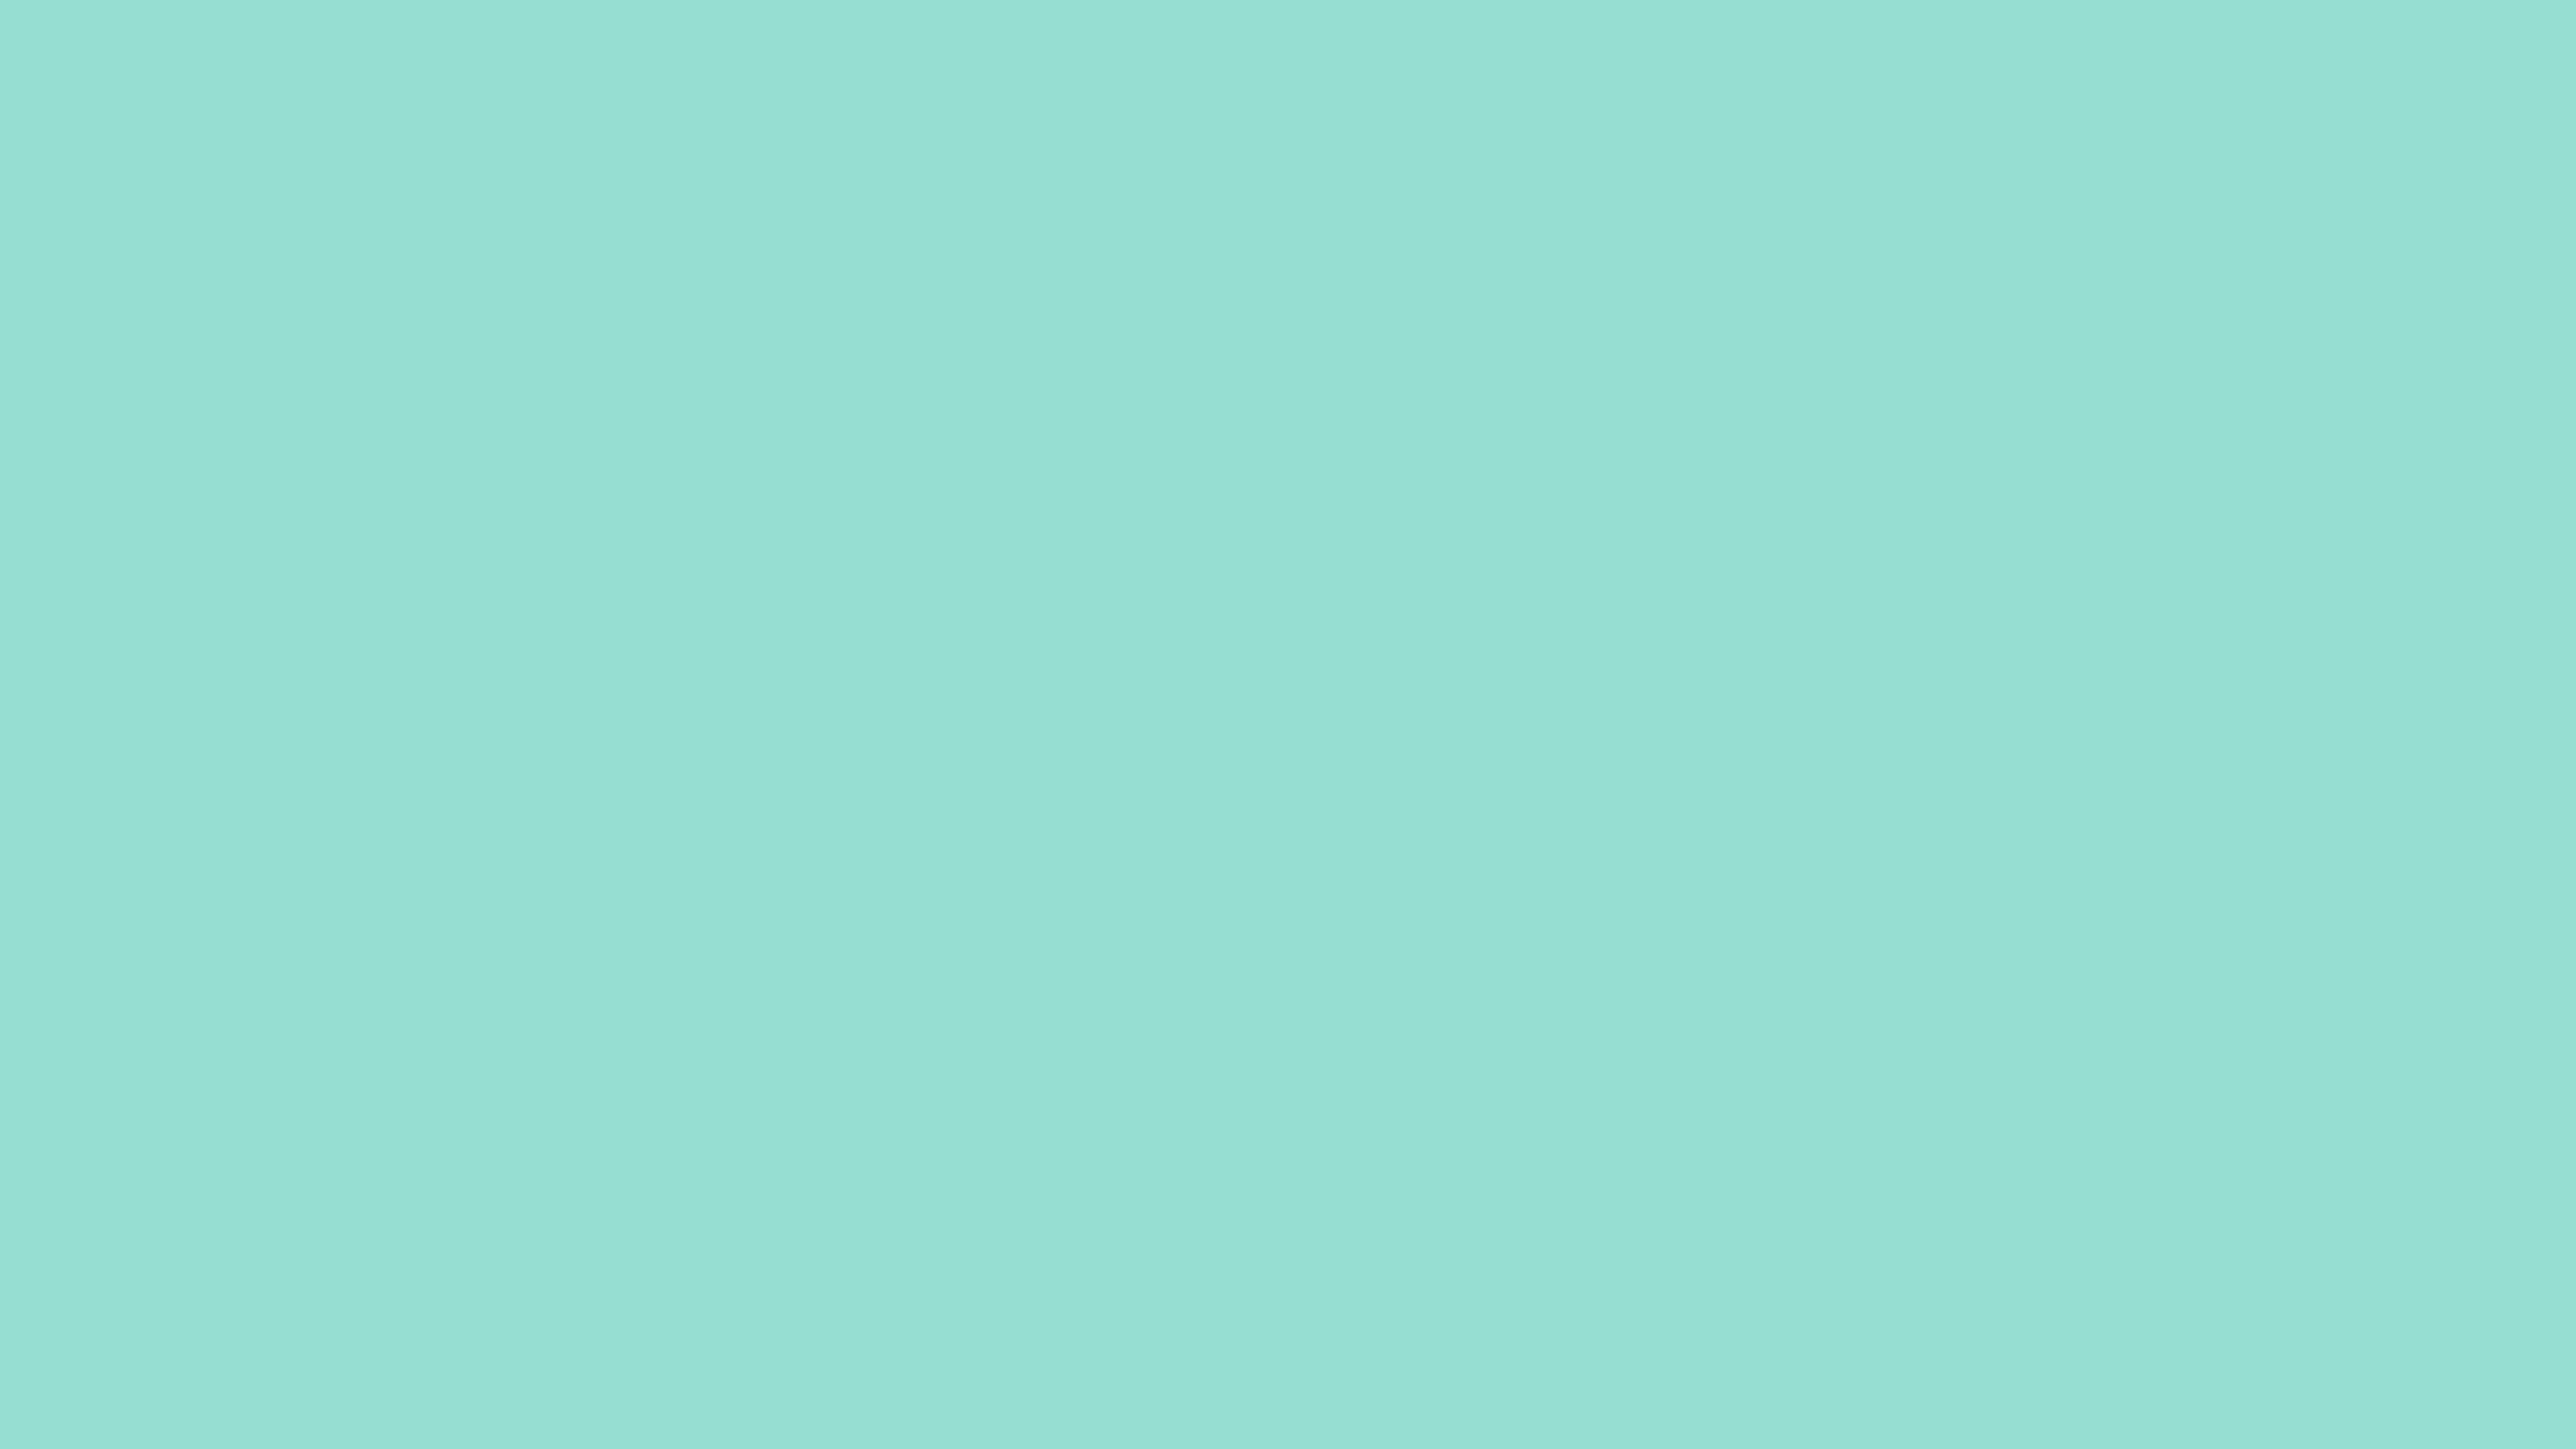 7680x4320 Pale Robin Egg Blue Solid Color Background